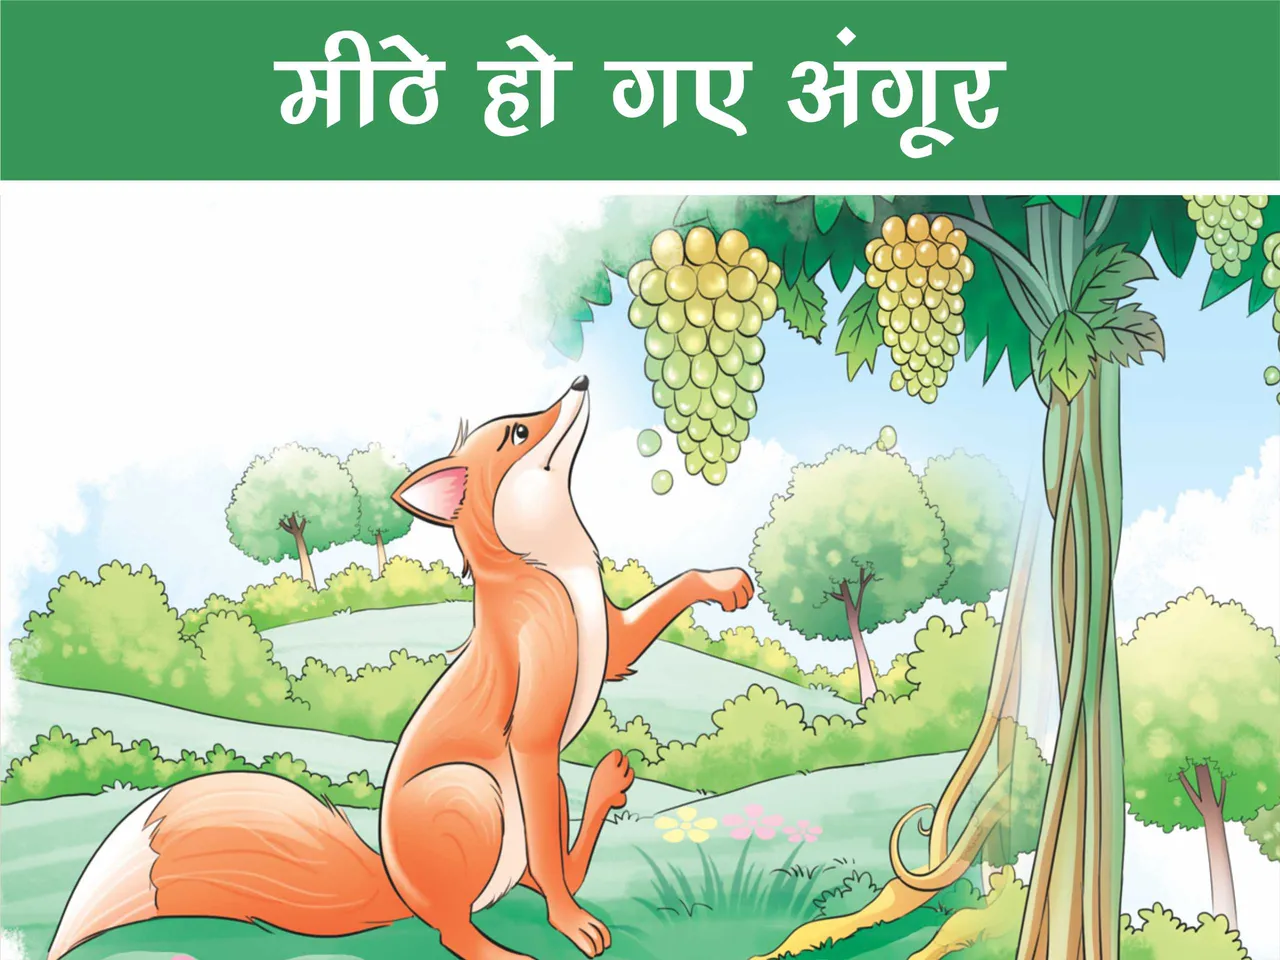 Fox and grapes cartoon image